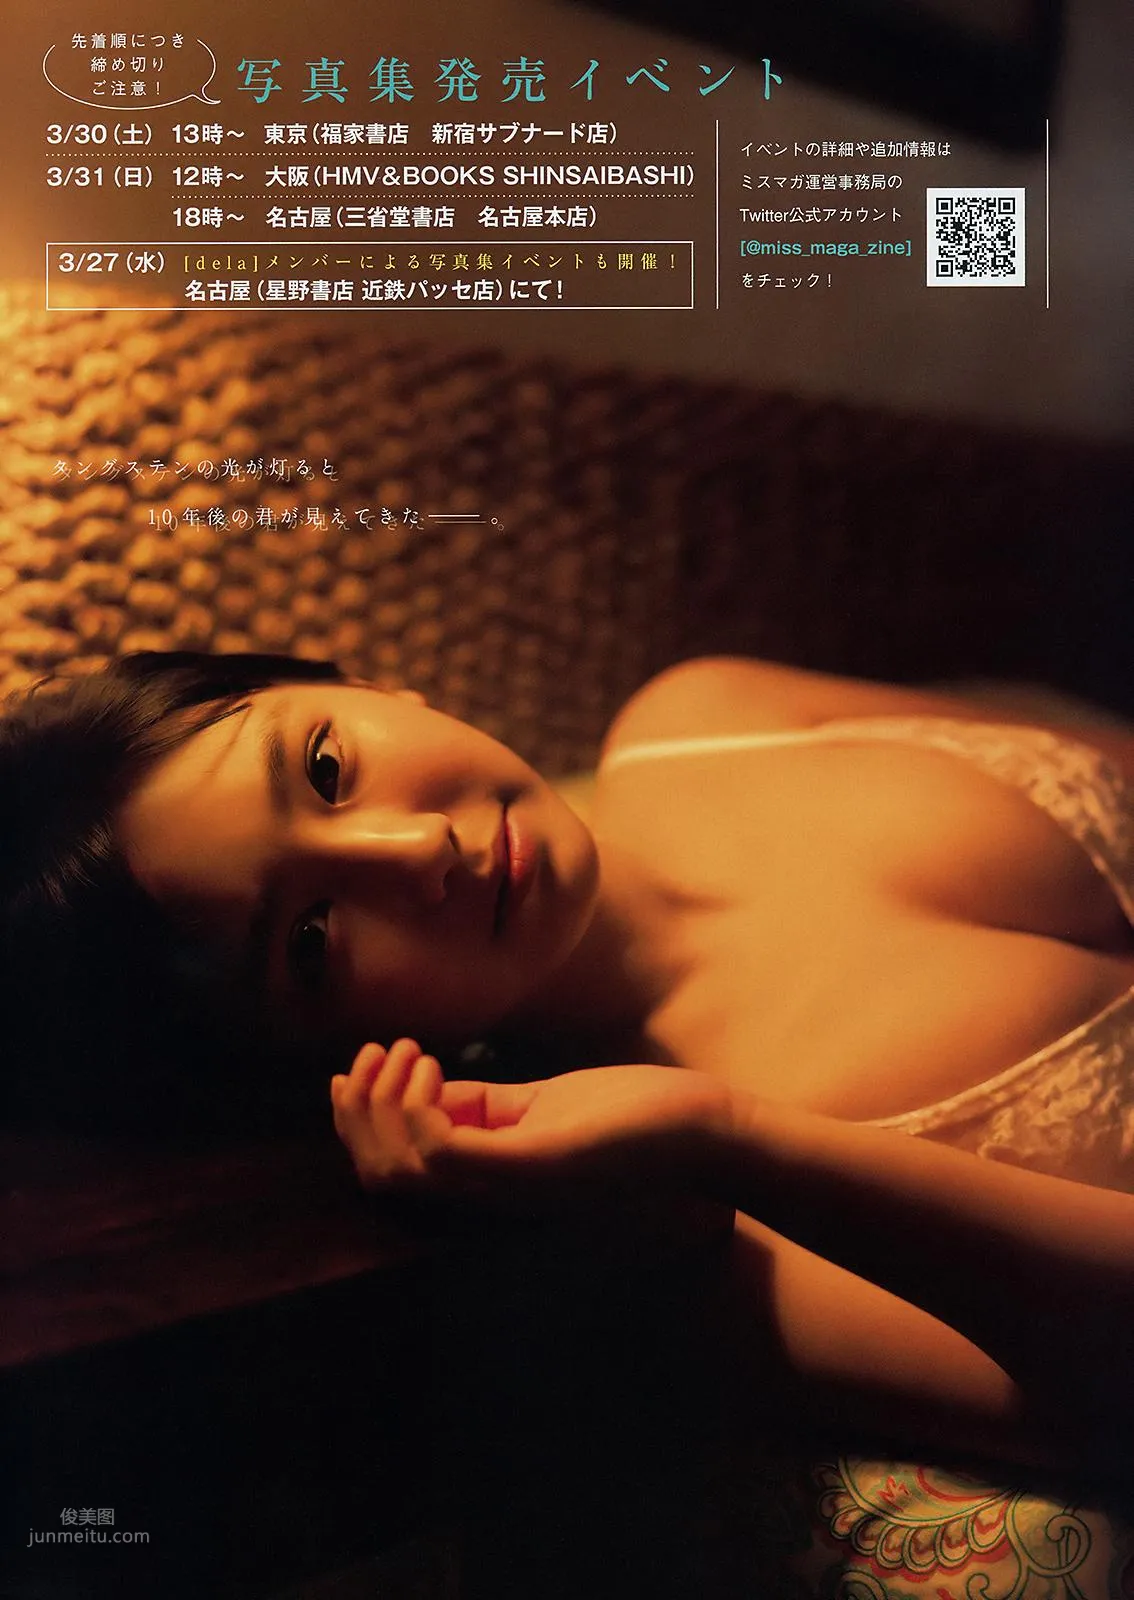 沢口愛華, Aika Sawaguchi - Young Magazine, Weekly Playboy, 2019_12